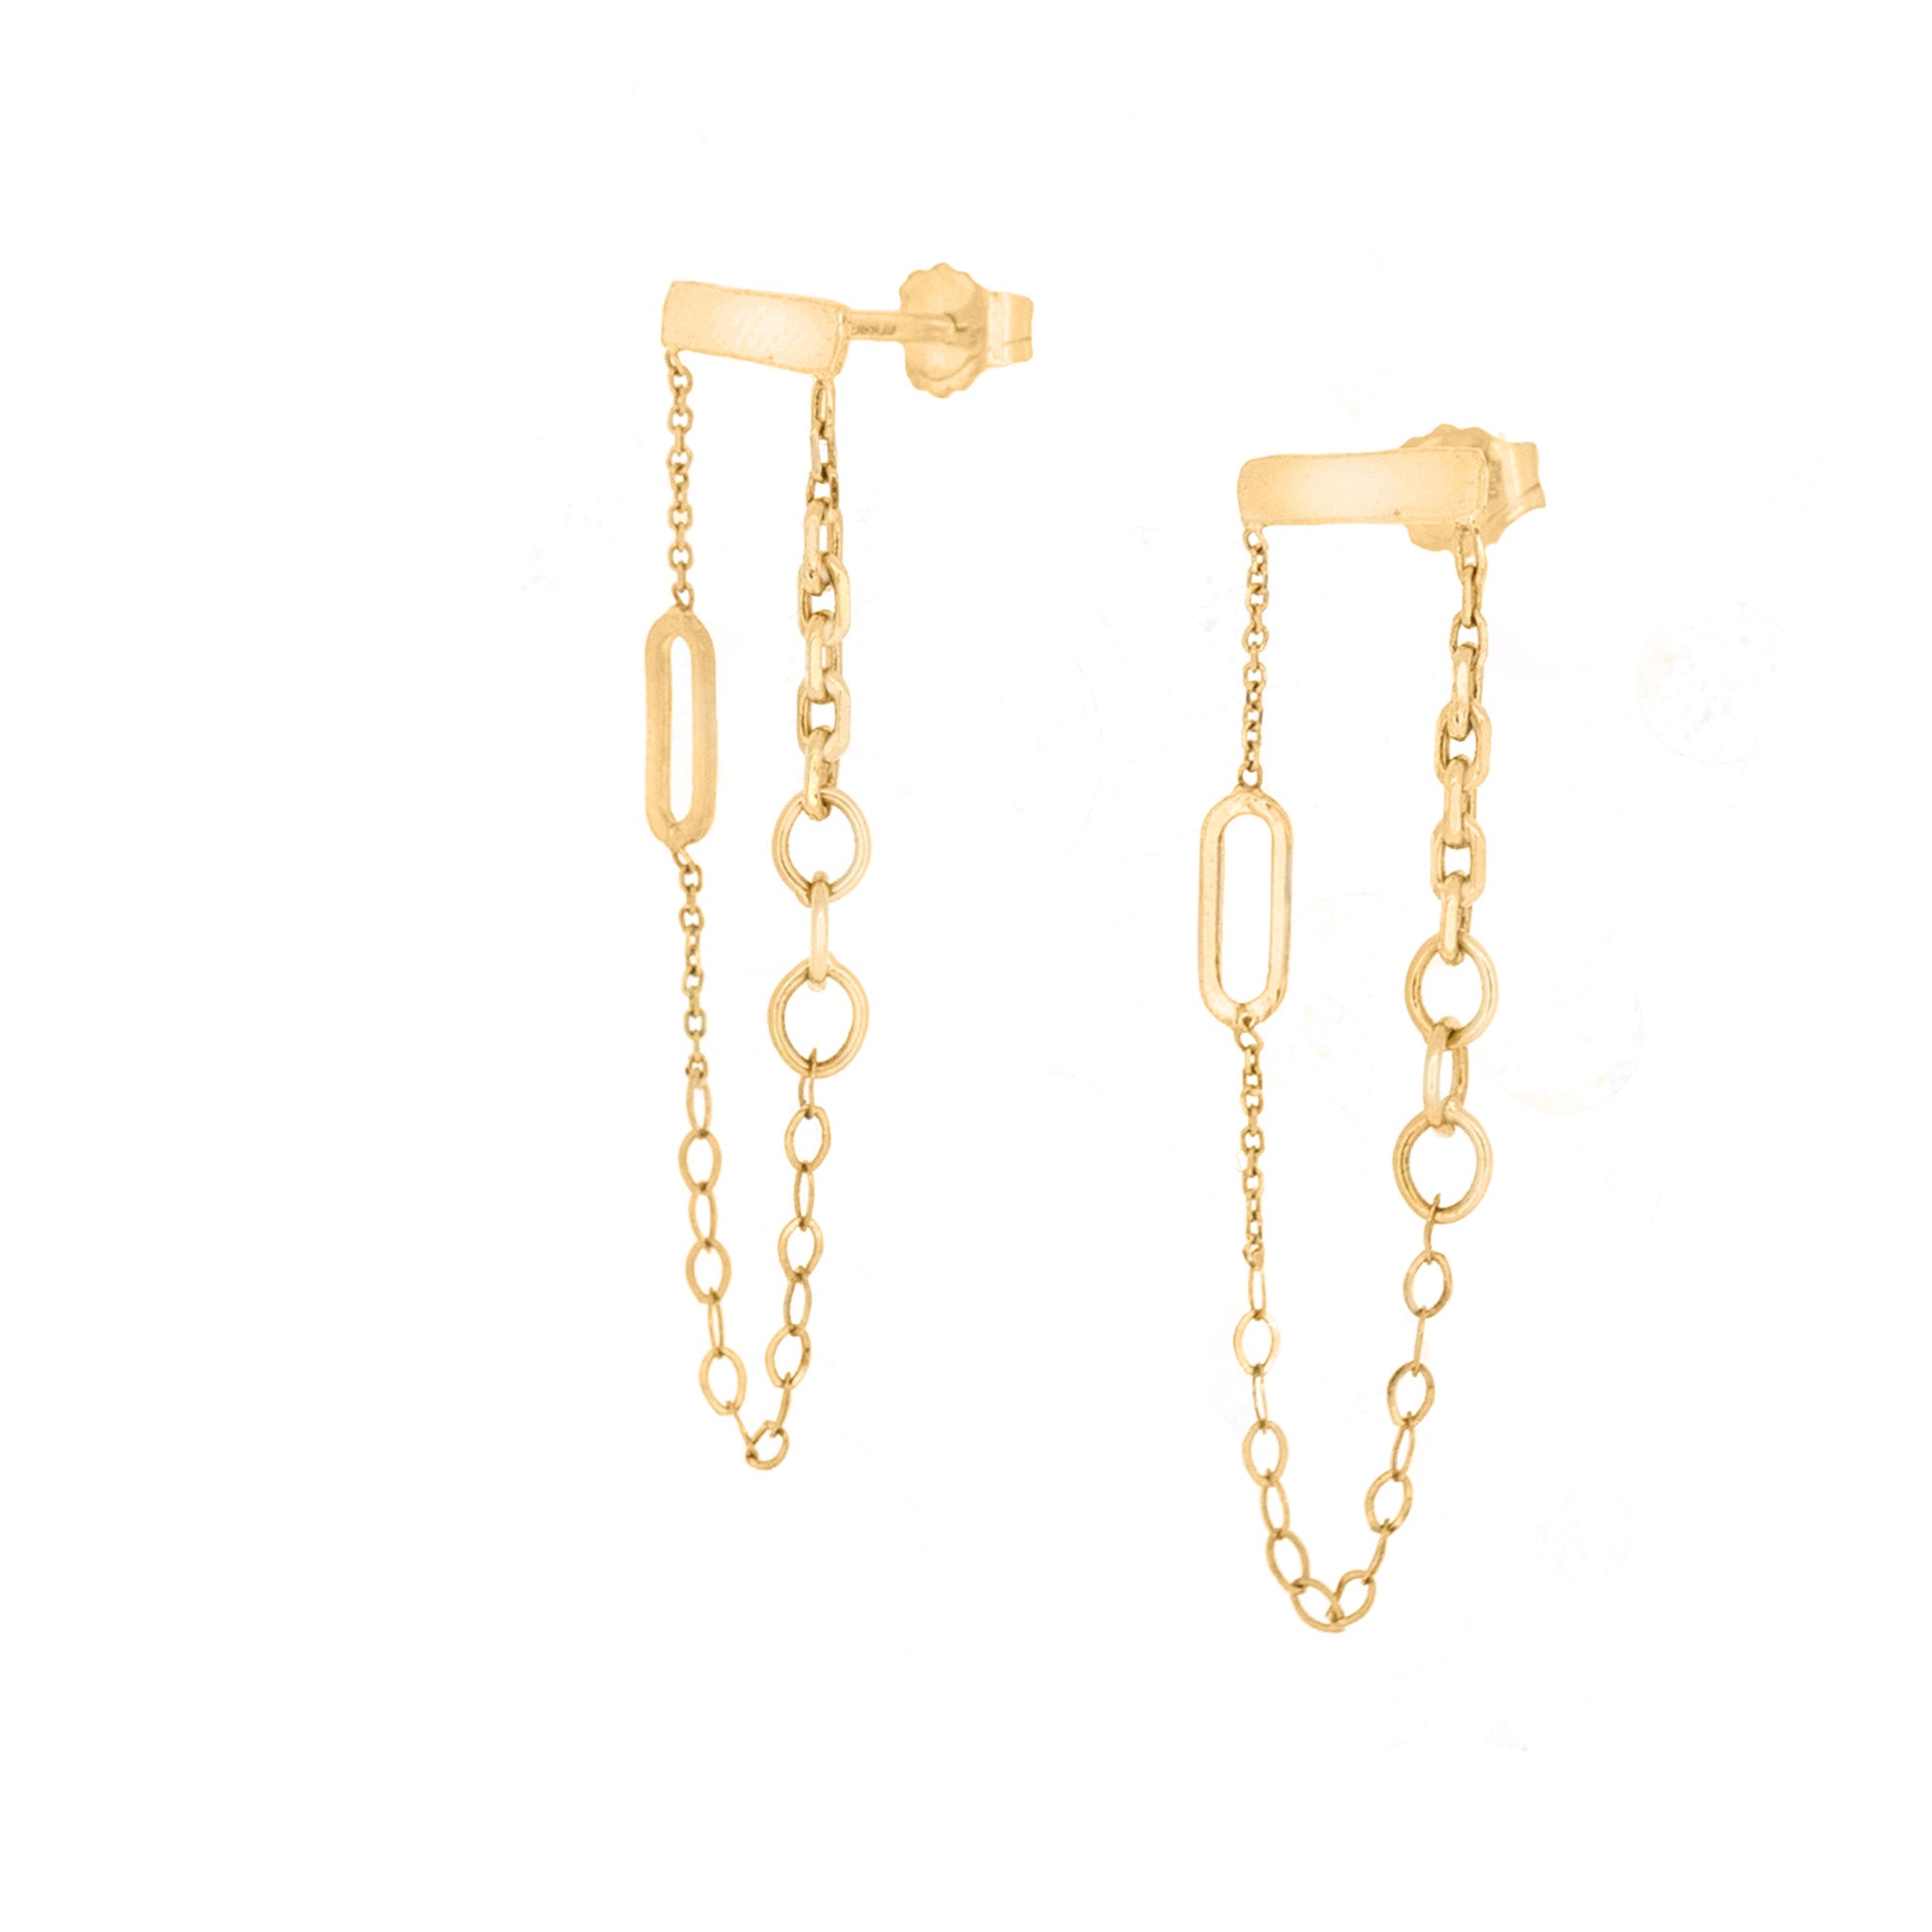 One Gram Gold Beads Chain Type Droplet Earrings ER2823